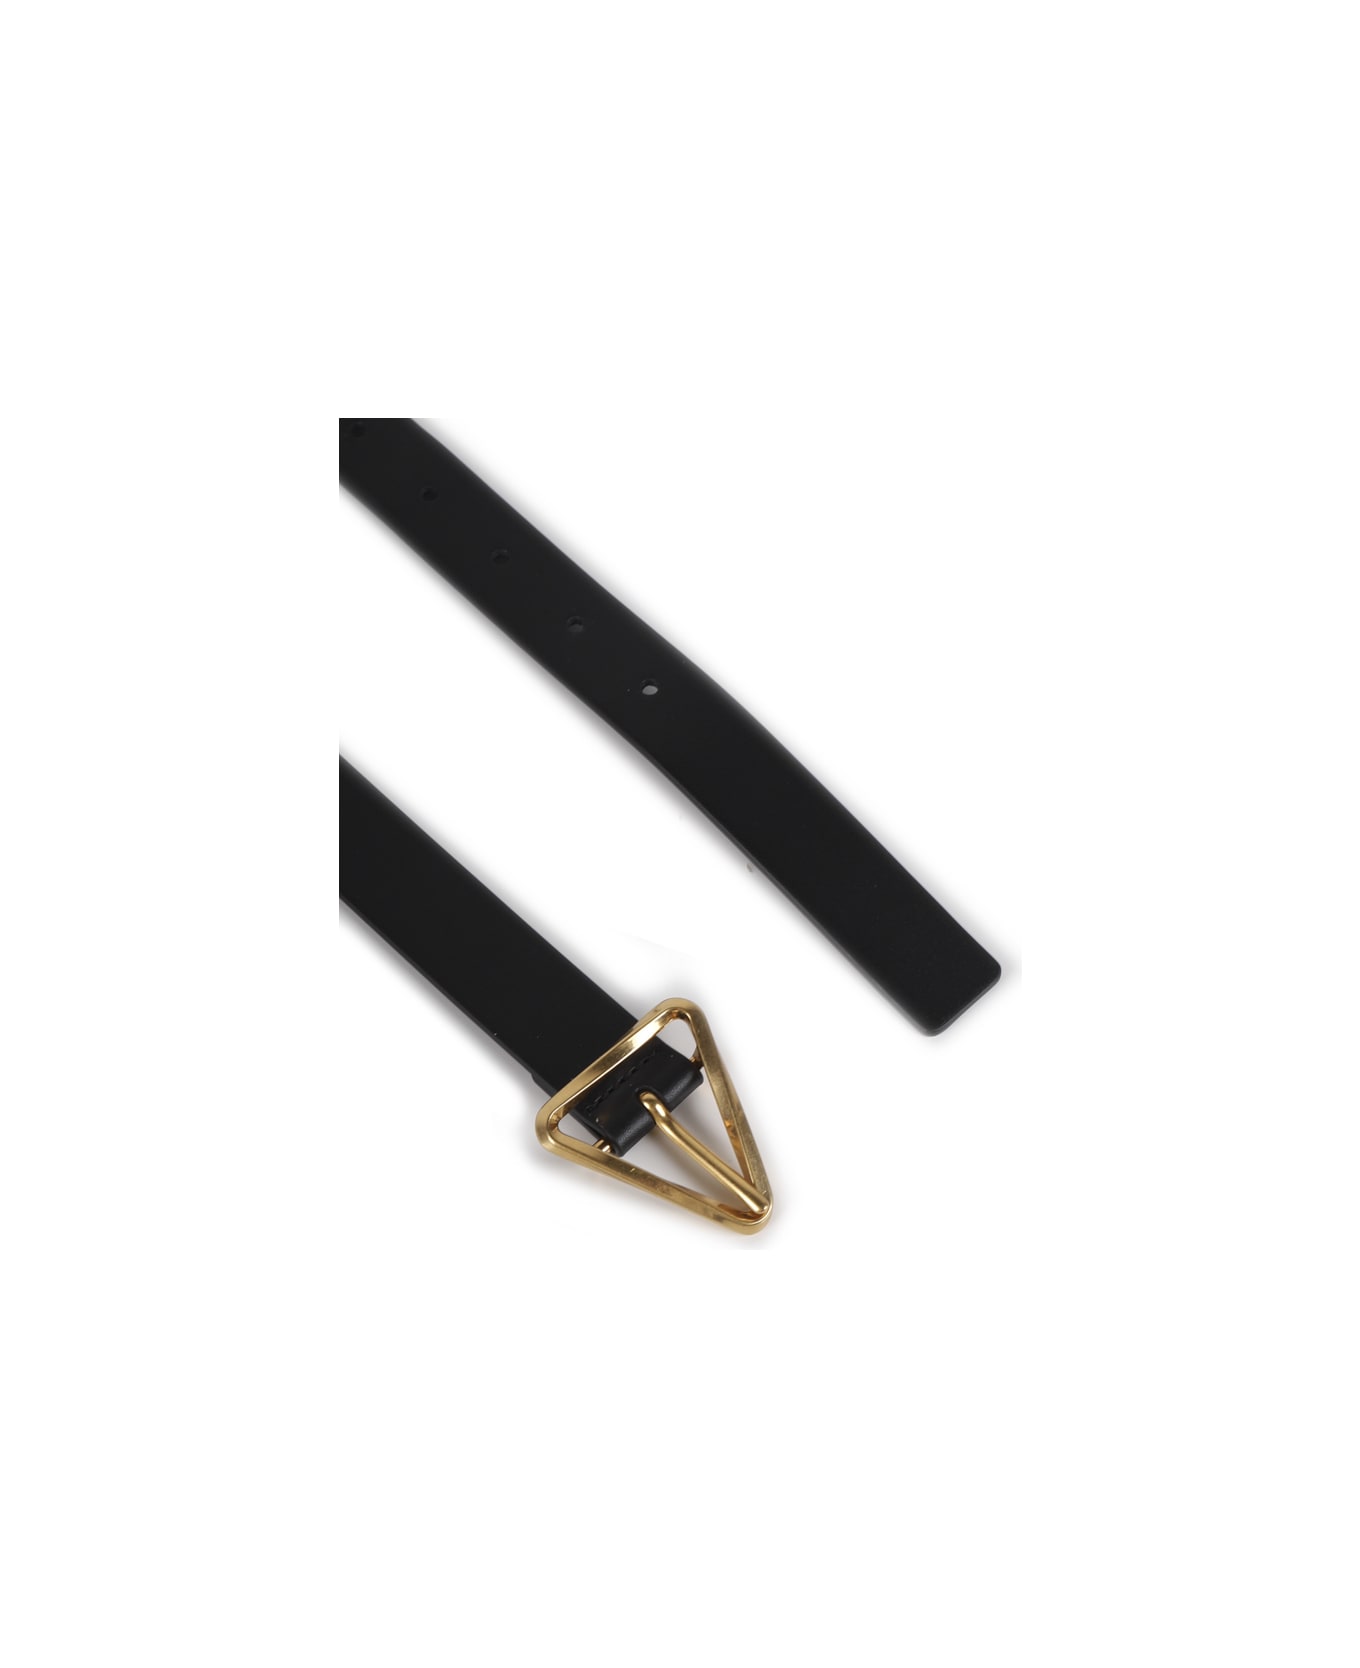 Bottega Veneta Triangle Leather Belt - Black